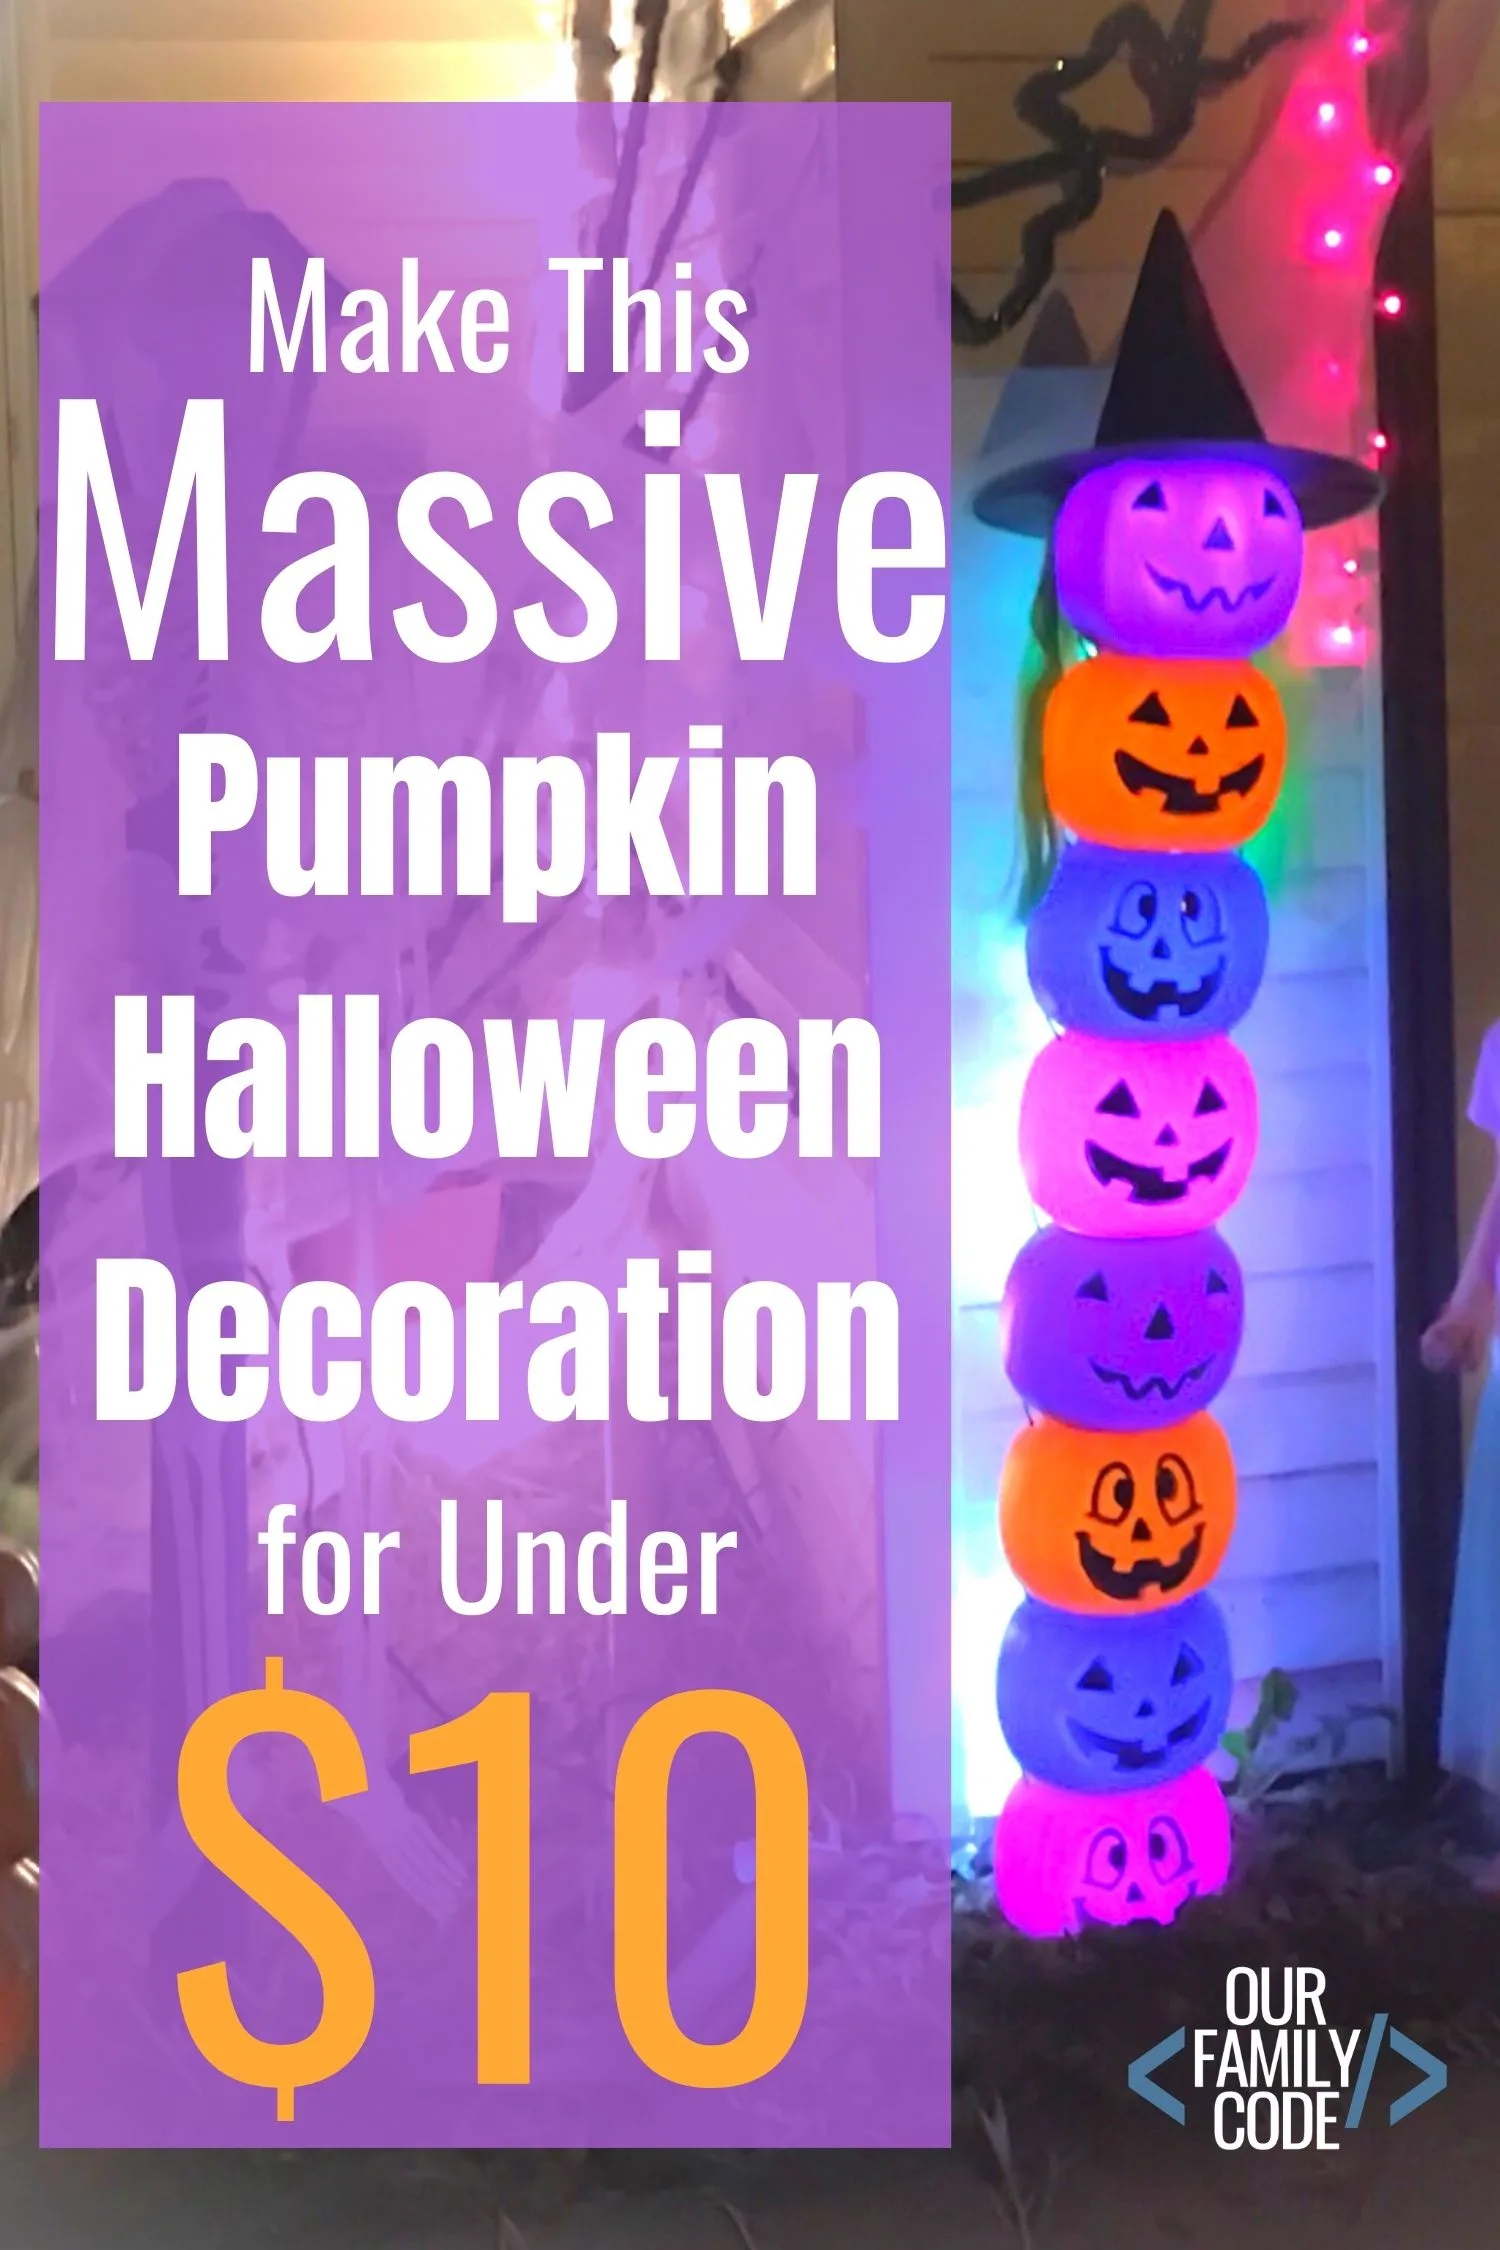 Make this Massive Pumpkin Tower Halloween Decoration for Under $10! #Halloweendecoration #easyHalloweendecoration #DIYHalloween #pumpkinproject #cheapdecorationsforHalloween